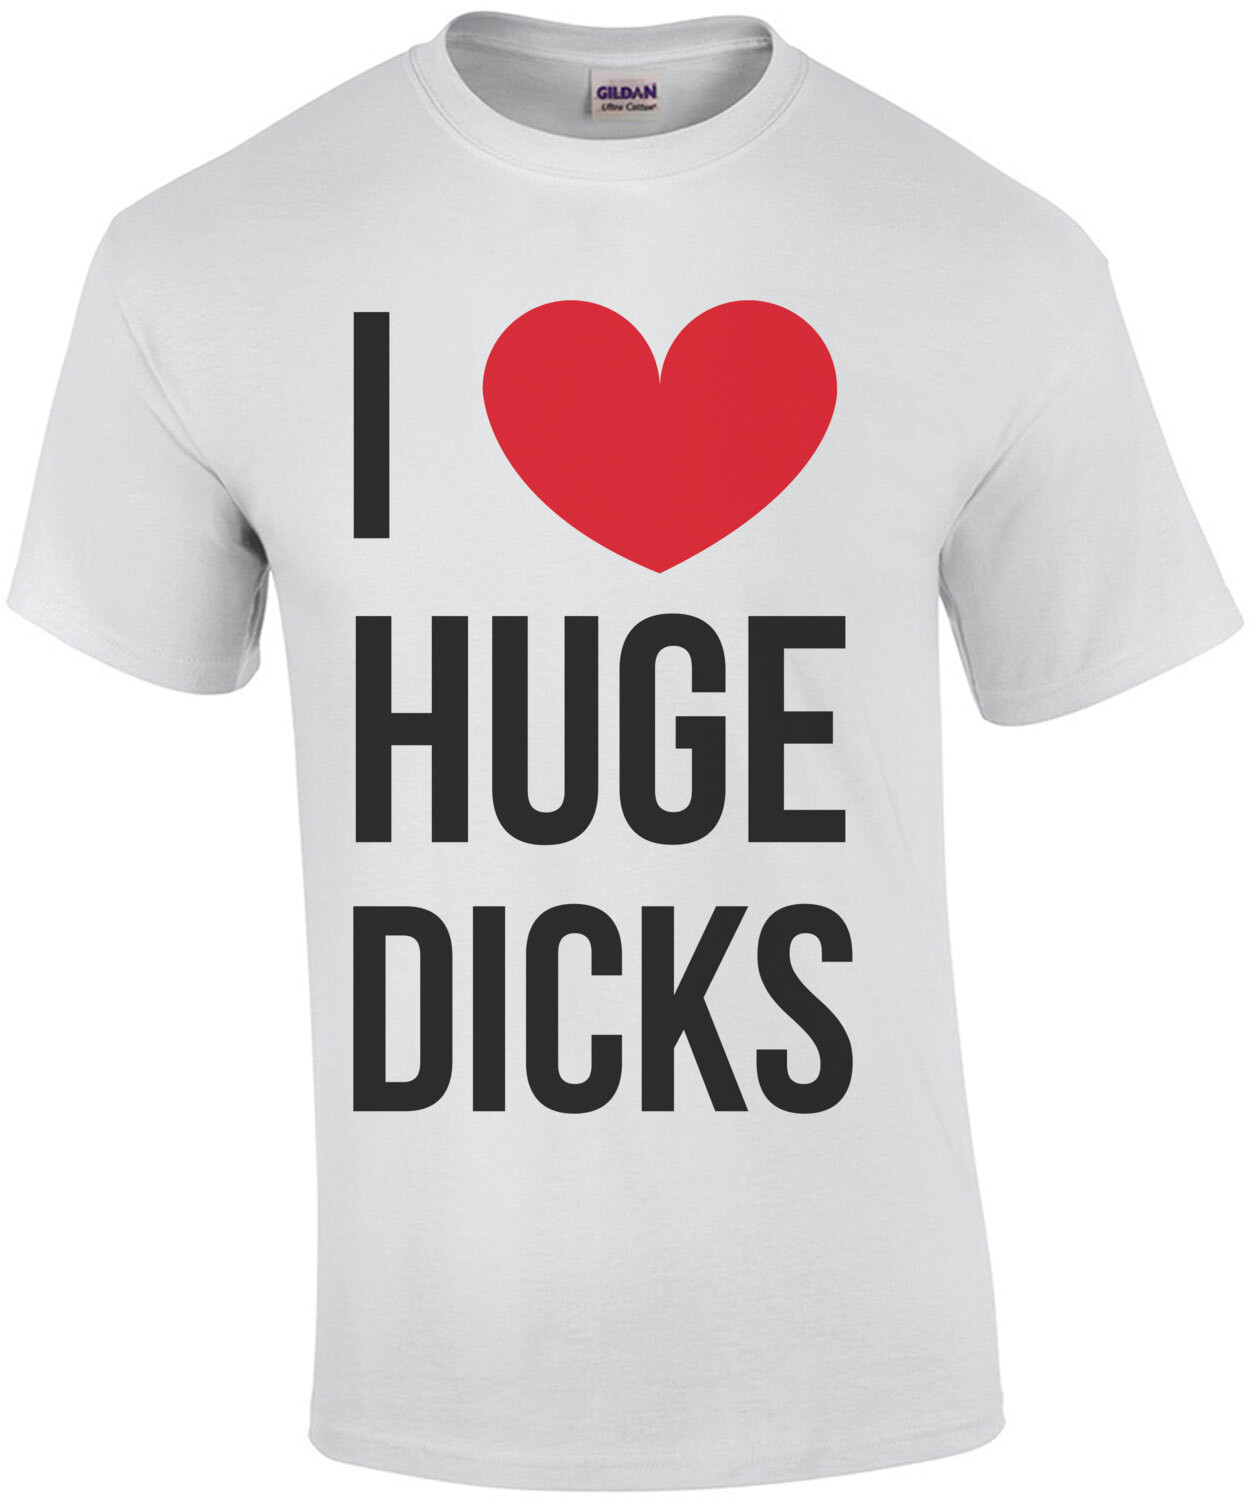 I love huge dicks - sexual offensive t-shirt